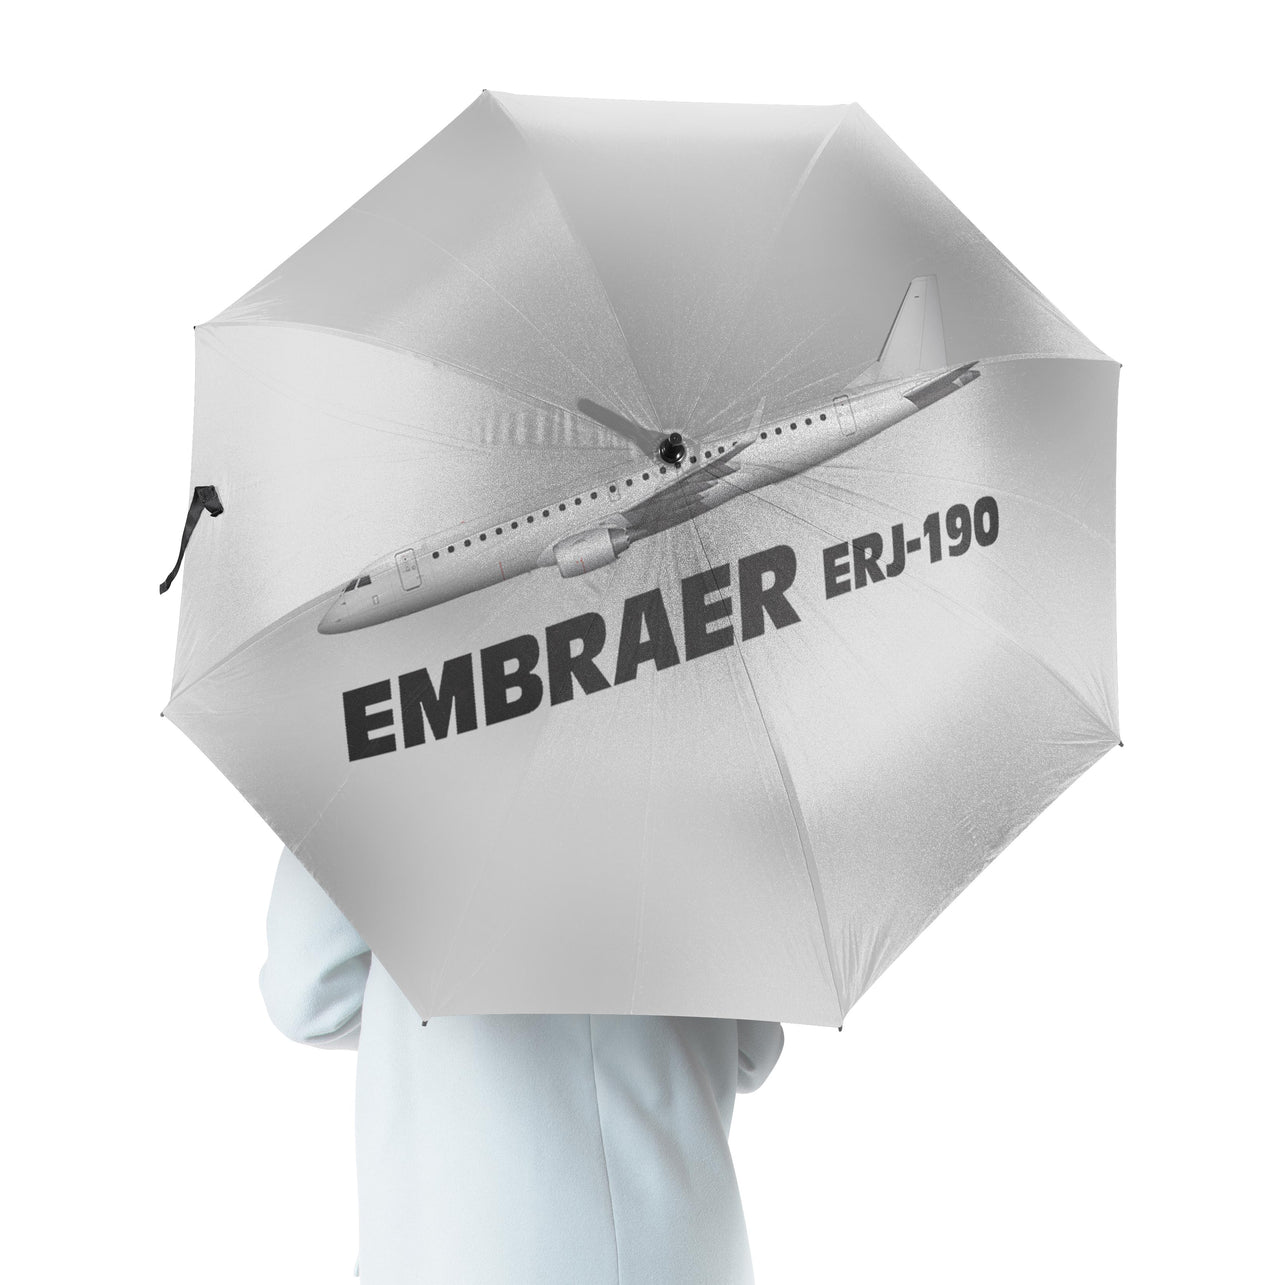 The Embraer ERJ-190 Designed Umbrella